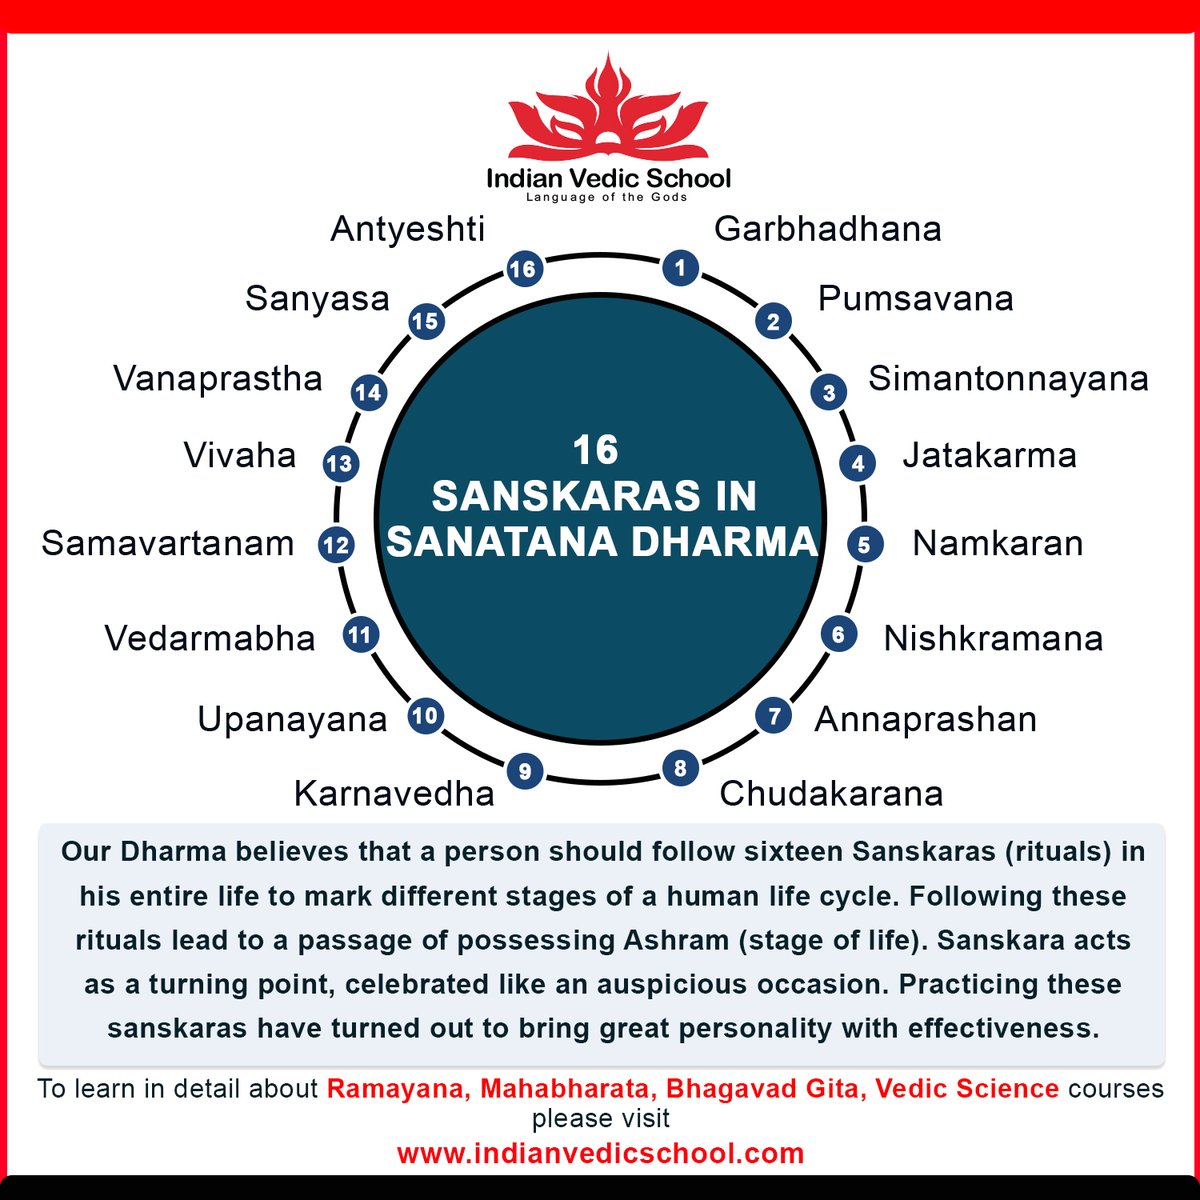 16 Sanskaras in Sanatana Dharma

#indianvedicchool #vedicschool #vediceducation #vedicsciences #sanatanadharma #sanskara #sanskaras #languageofthegods #indian #vedic #school #educationforlife